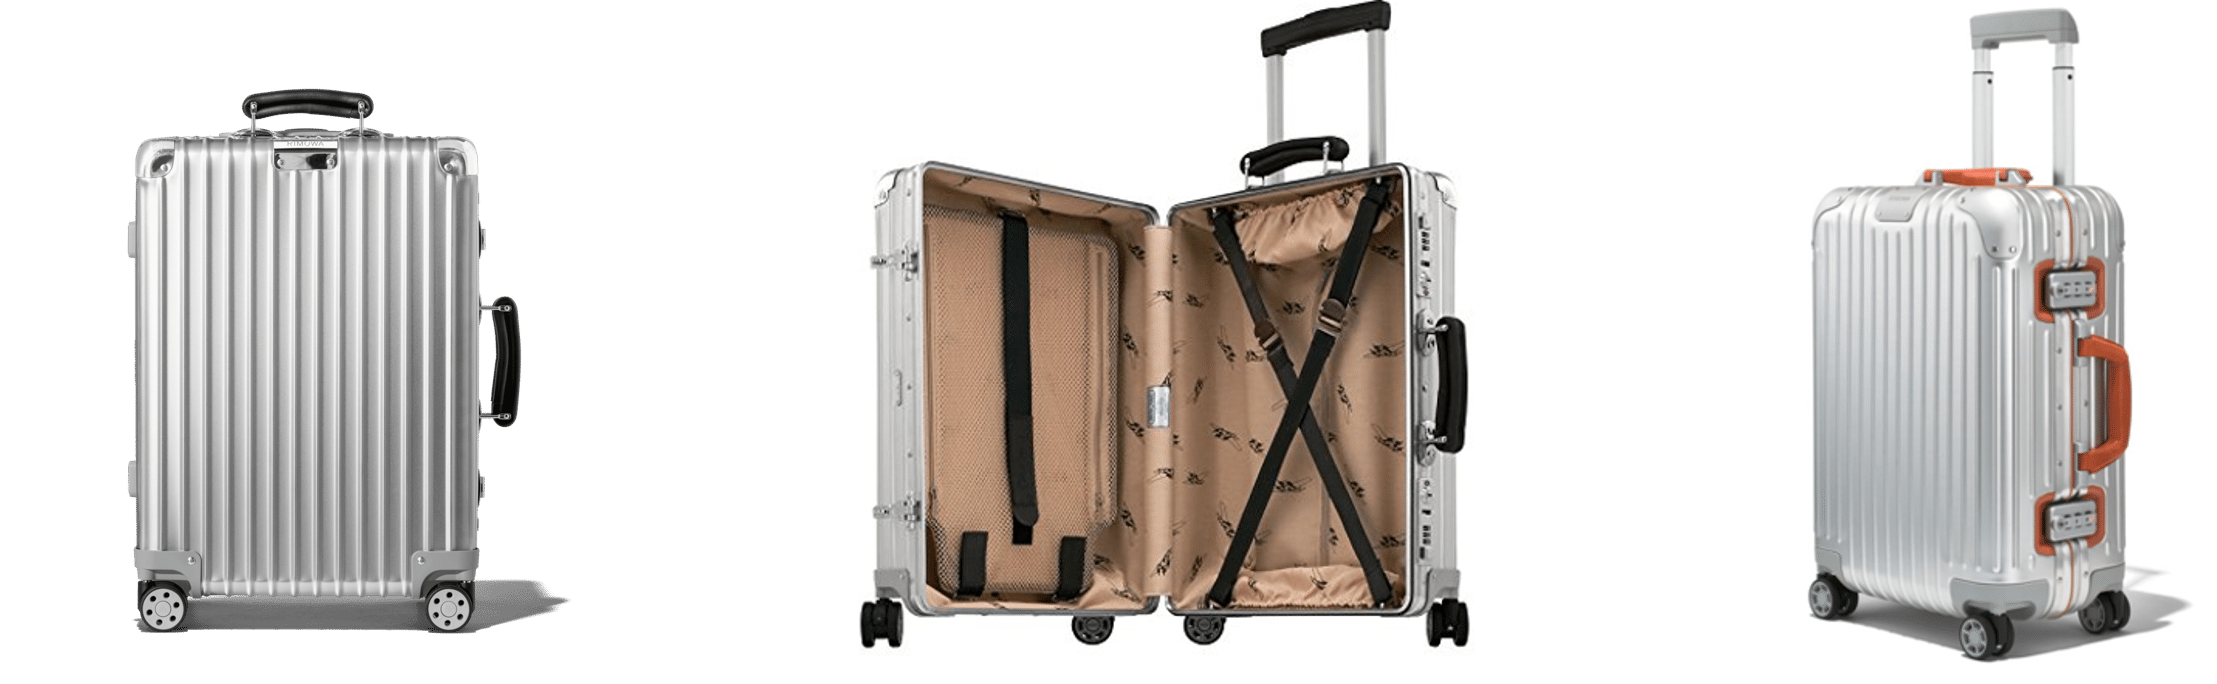 Rimowa Classic Cabin Carry On Luggage